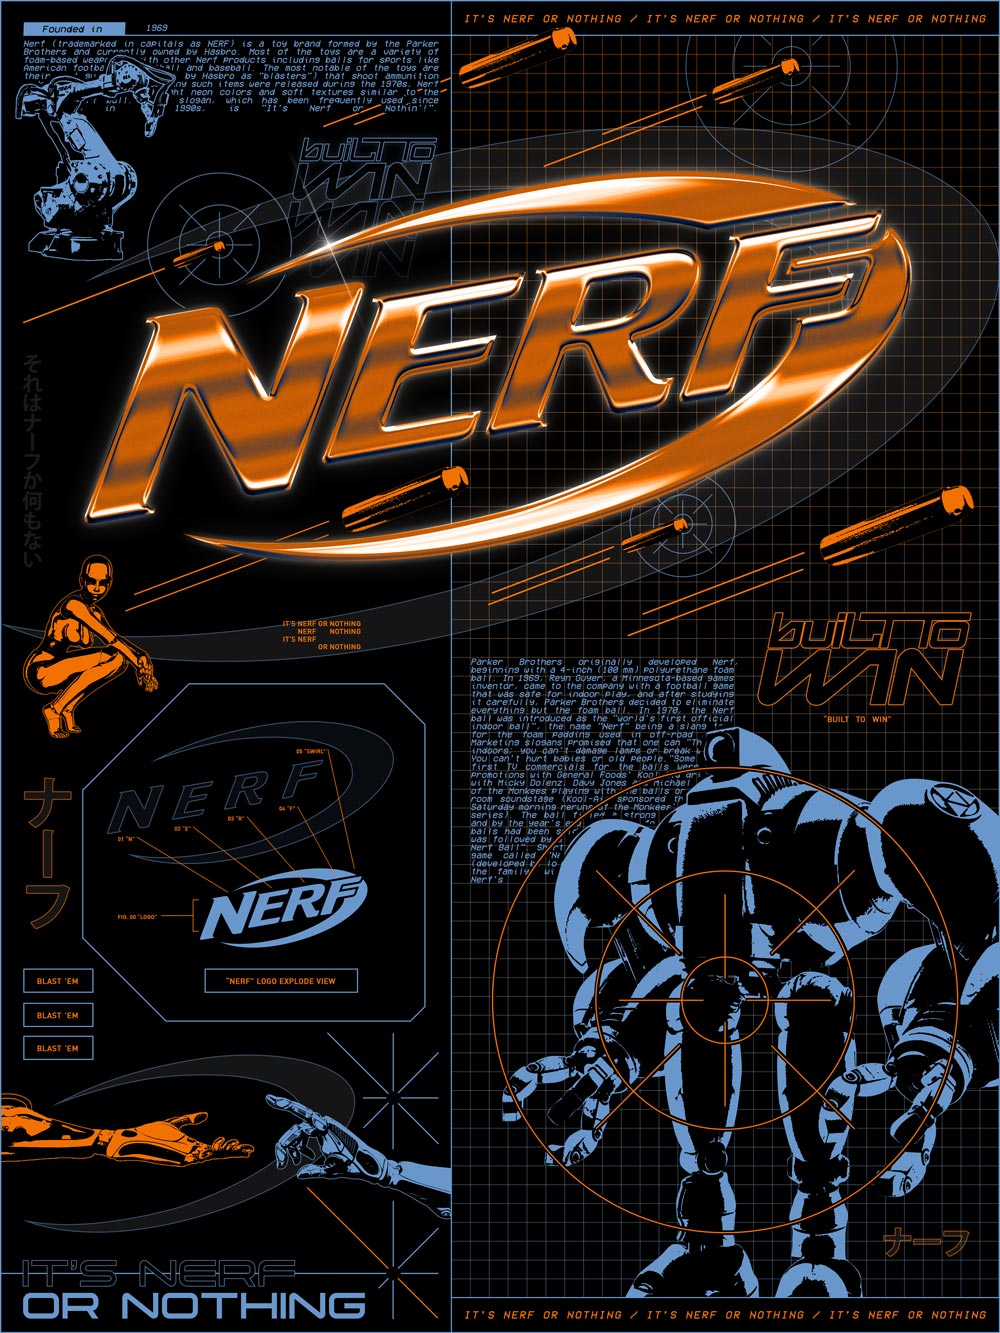 NERF_web